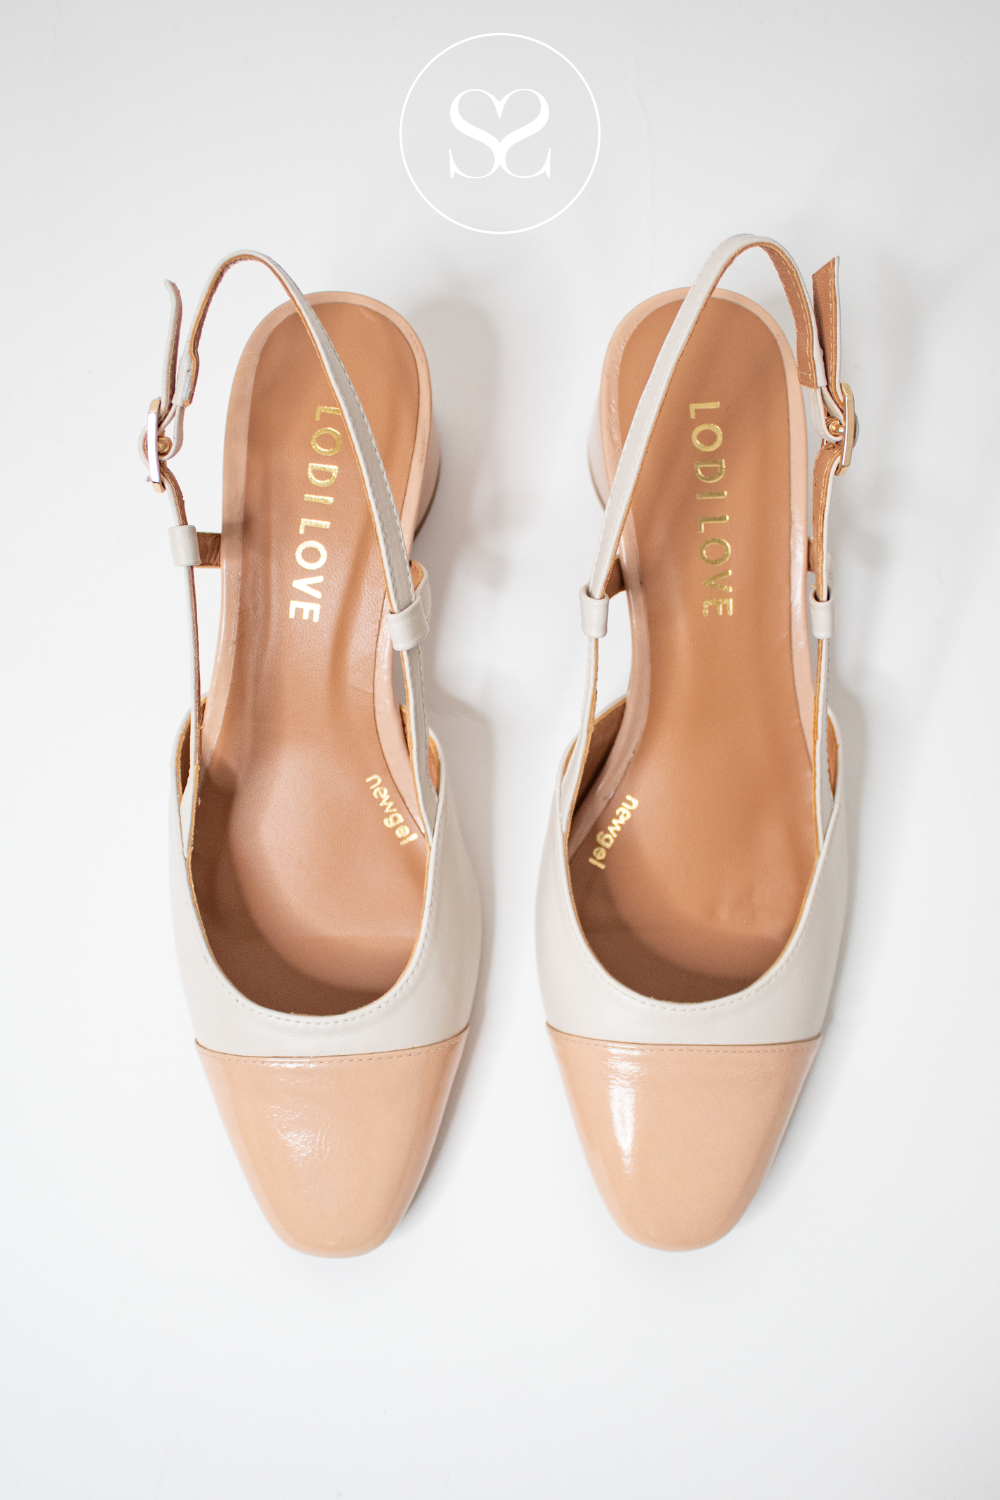 cream and nude leather heels - lodi footwear Ireland